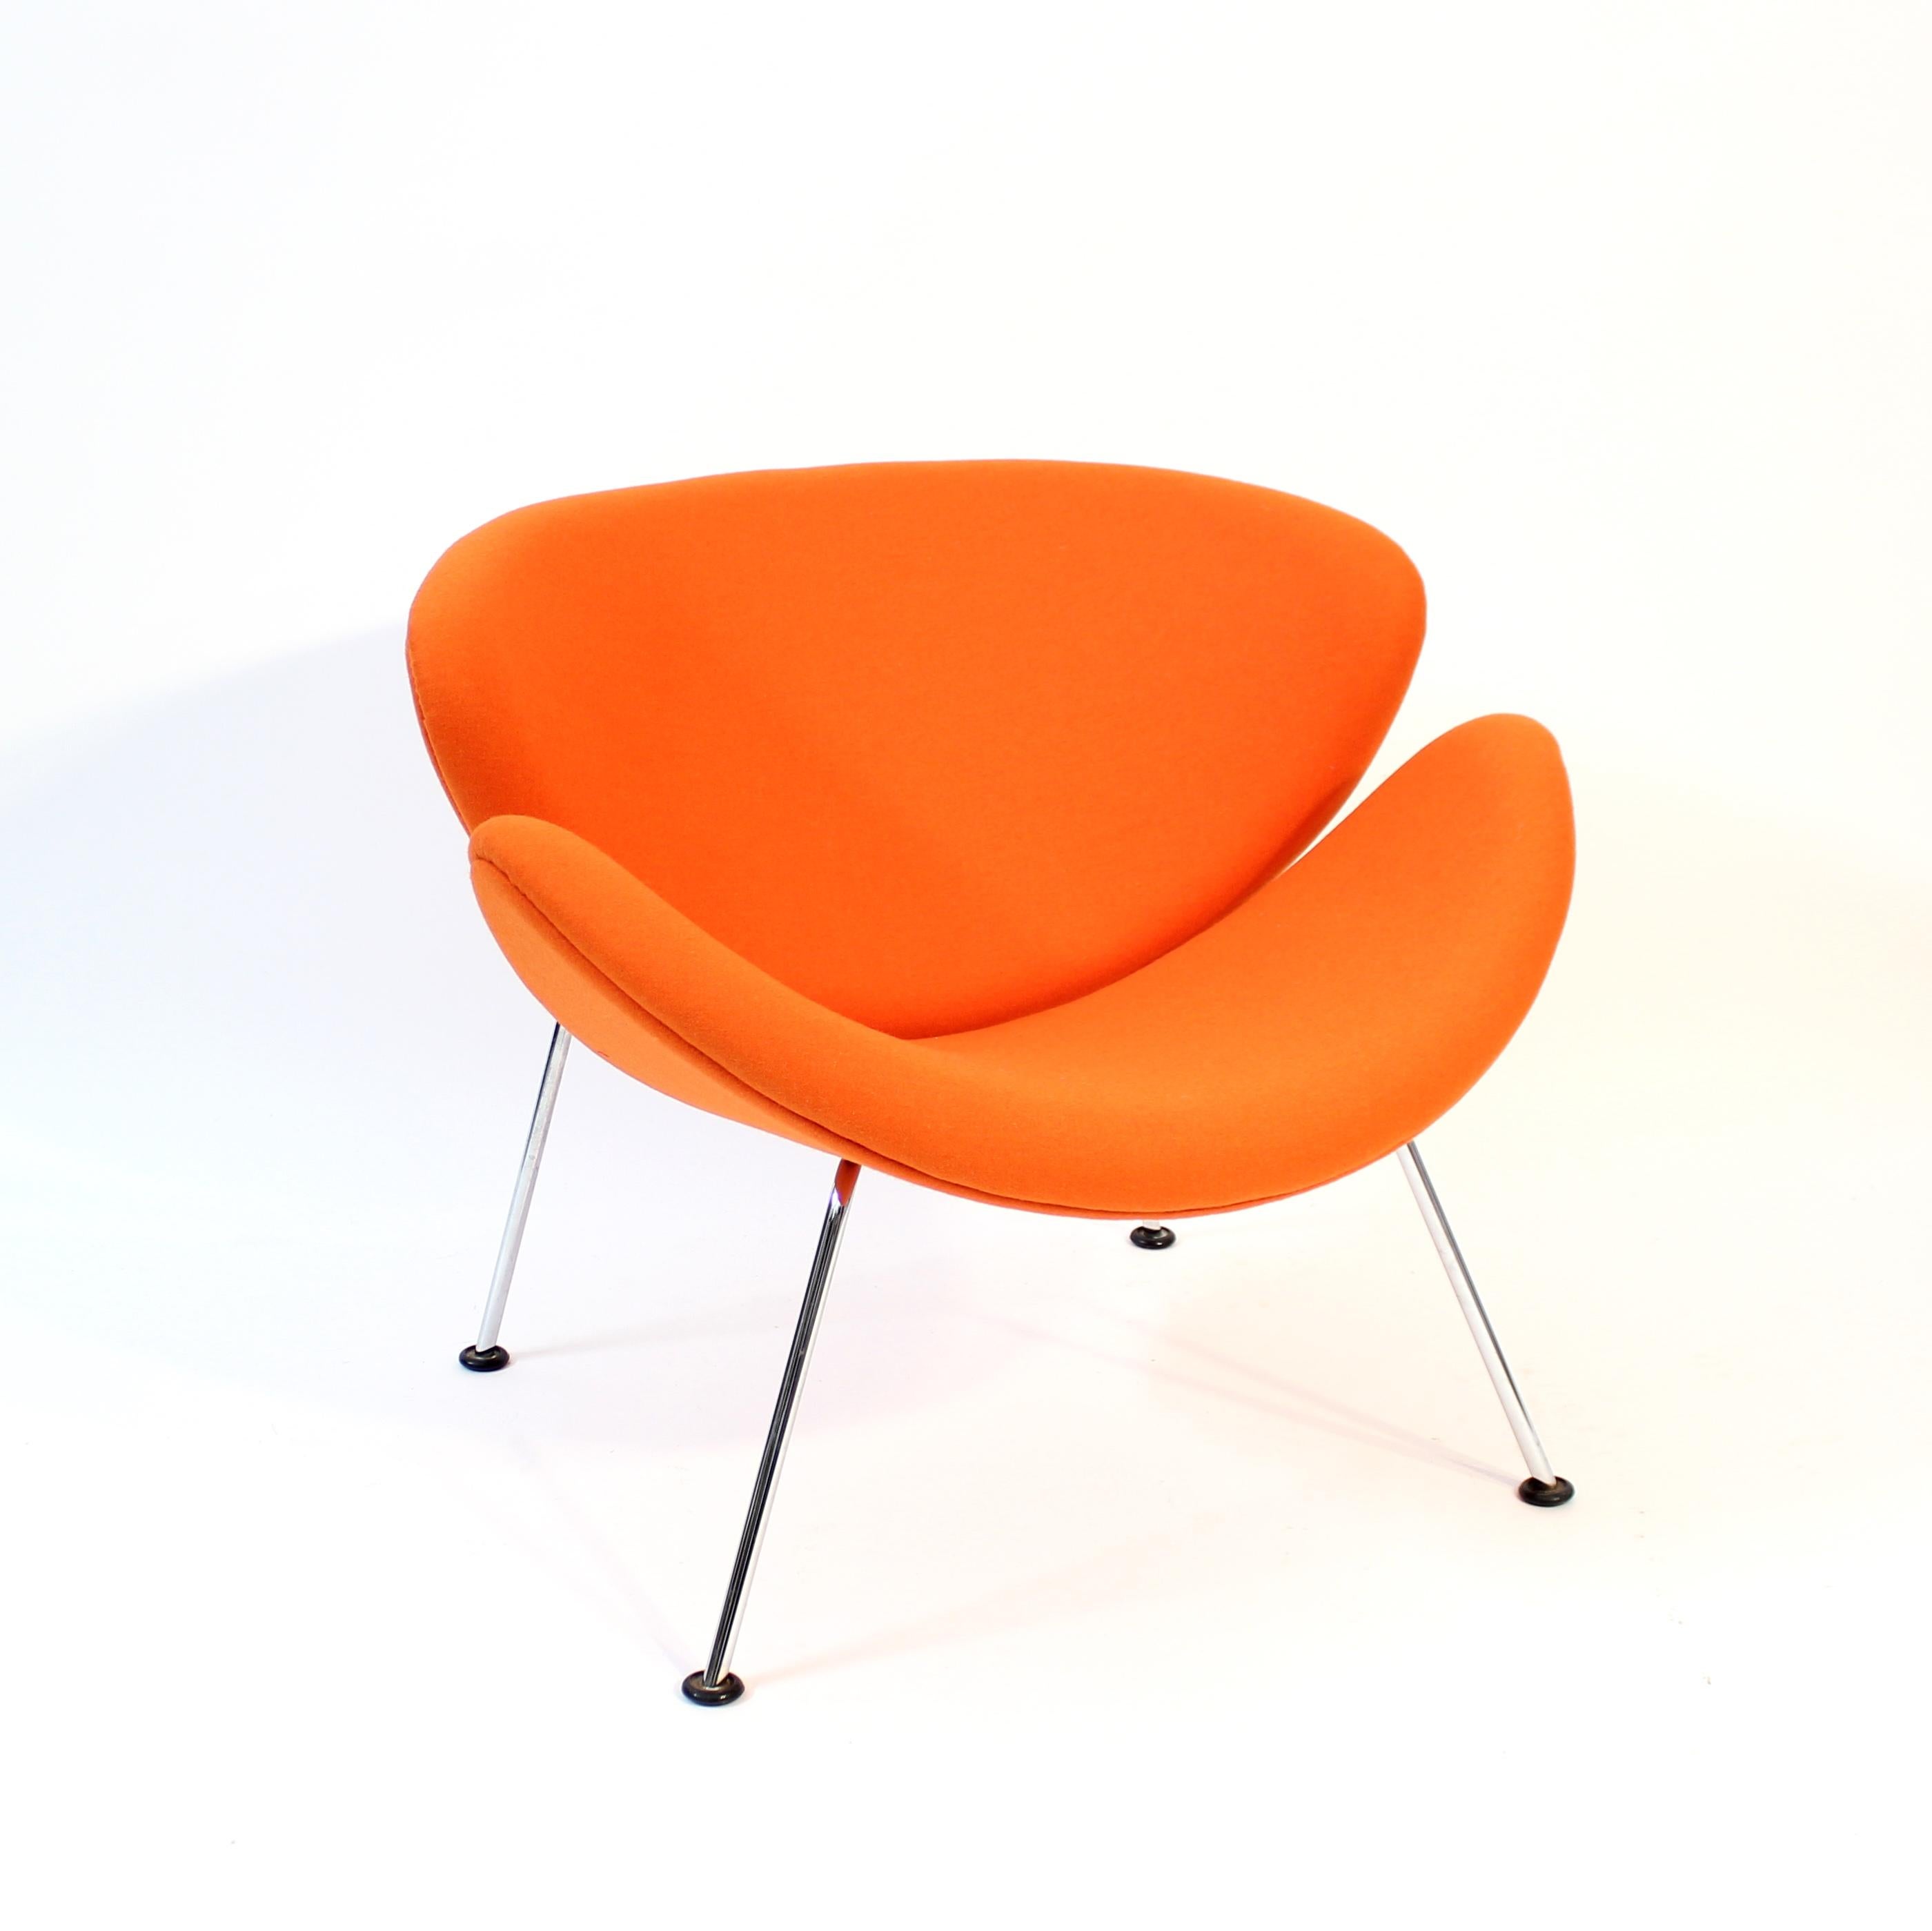 Dutch Pierre Paulin, Orange Slice chair, Artifort, 1960 For Sale